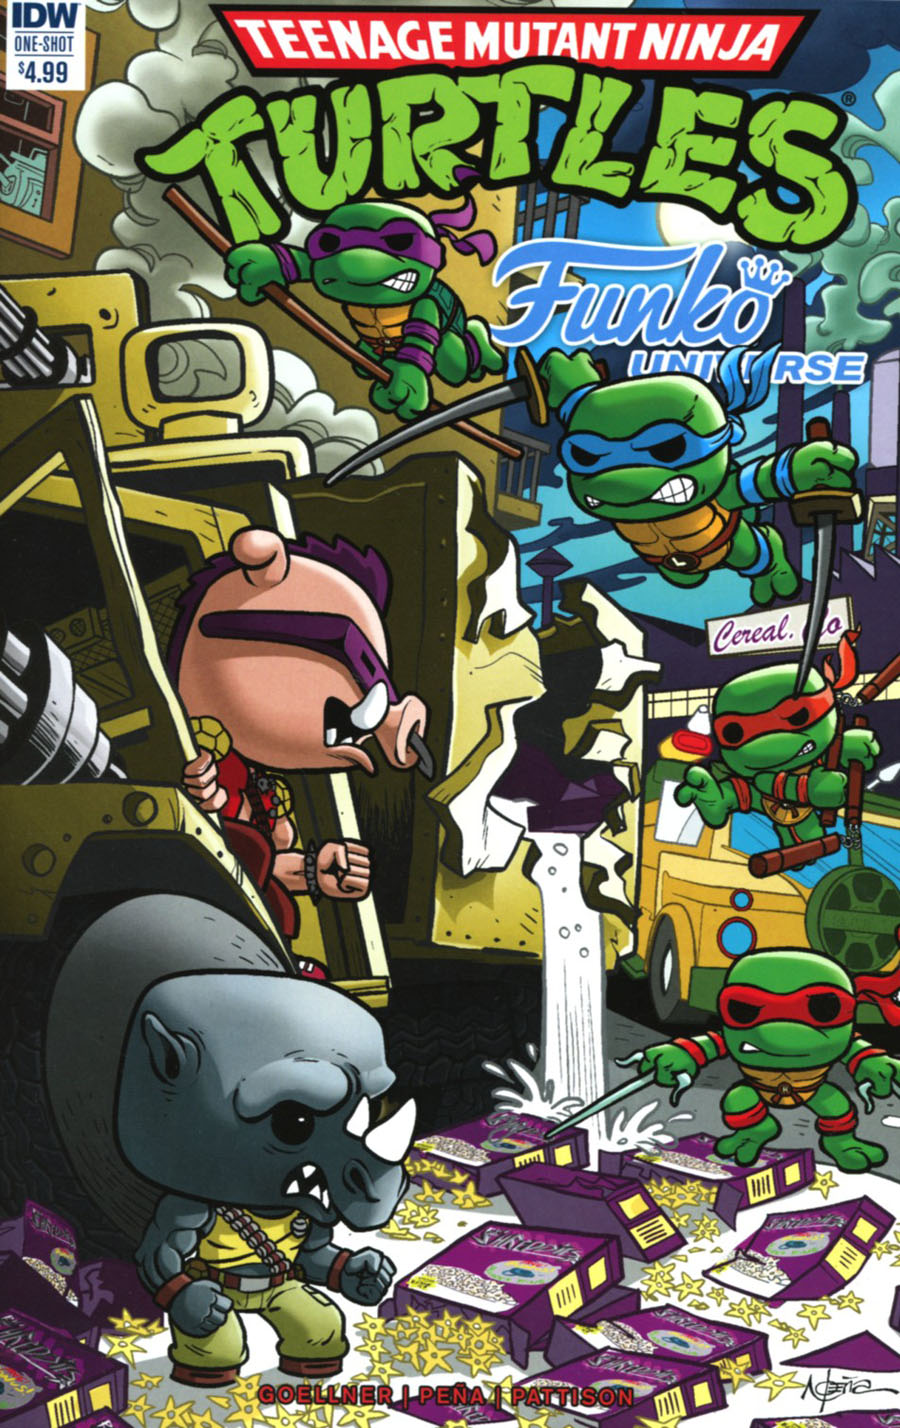 Teenage Mutant Ninja Turtles Funko Universe Cover A Regular Nico Pena Cover